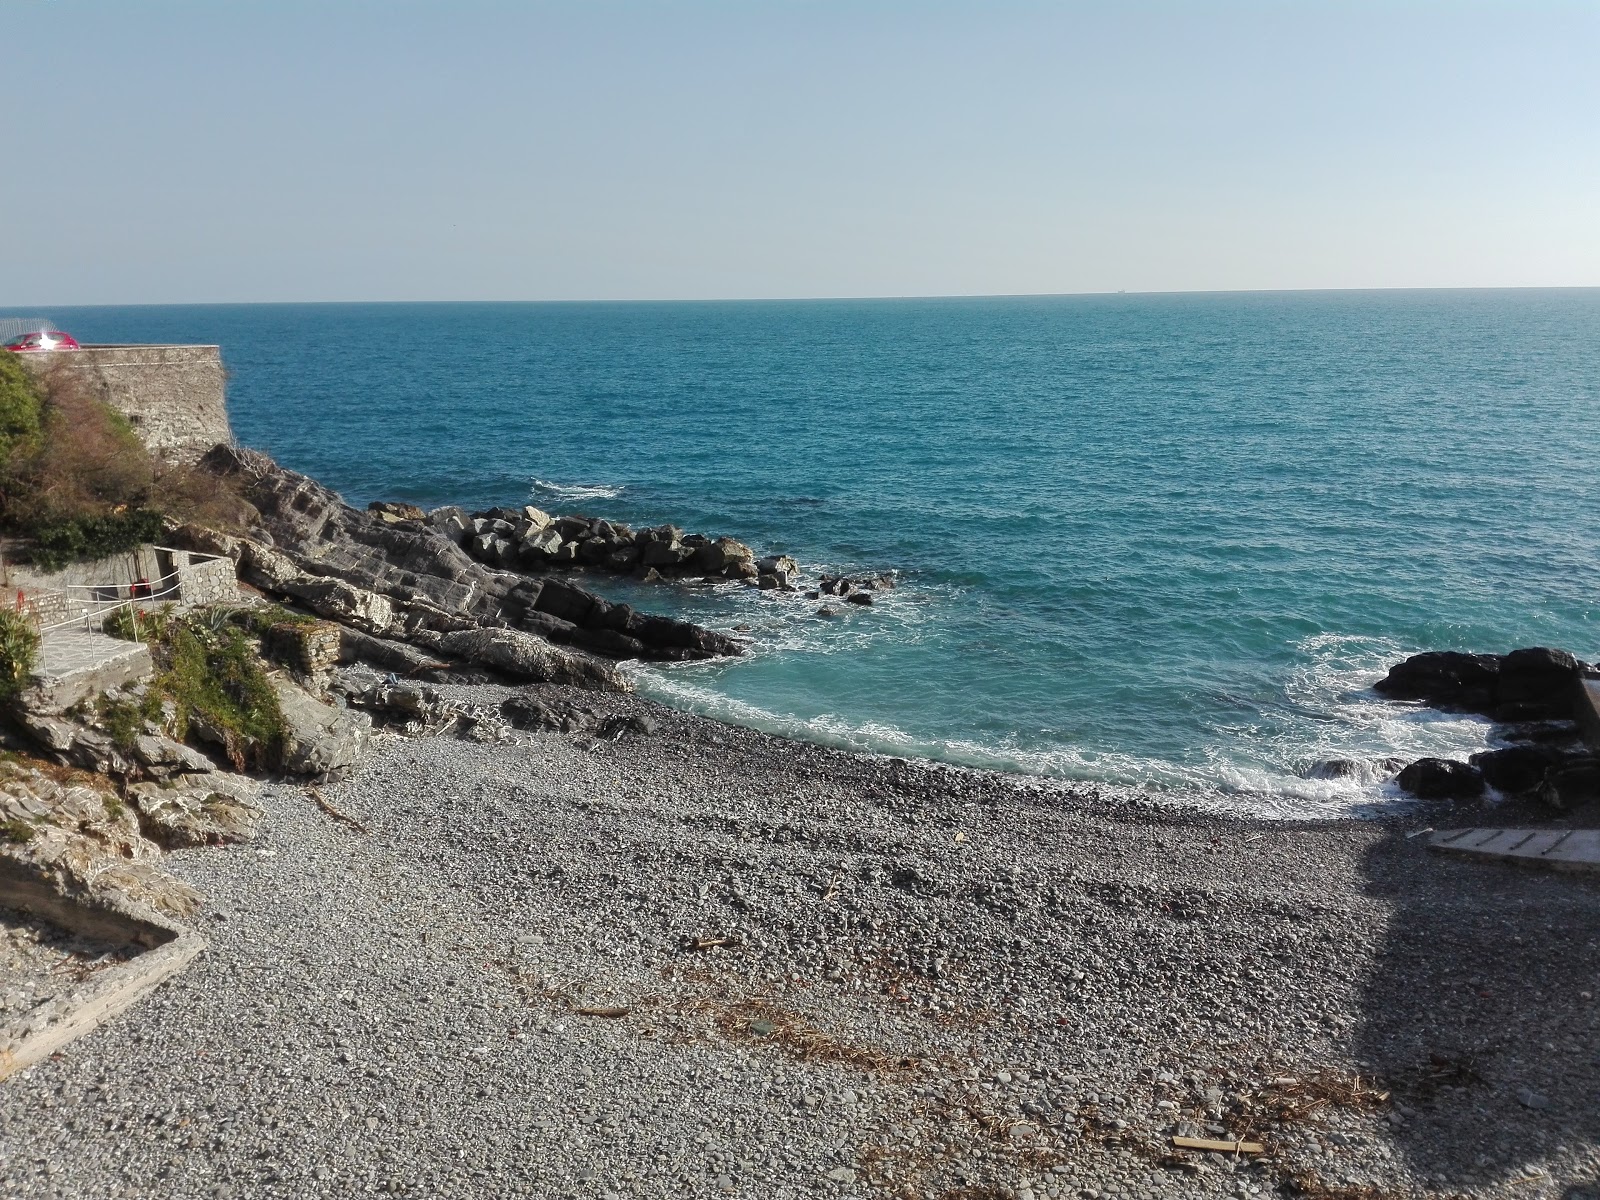 Foto van Spiaggia Murcarolo met gemiddeld niveau van netheid